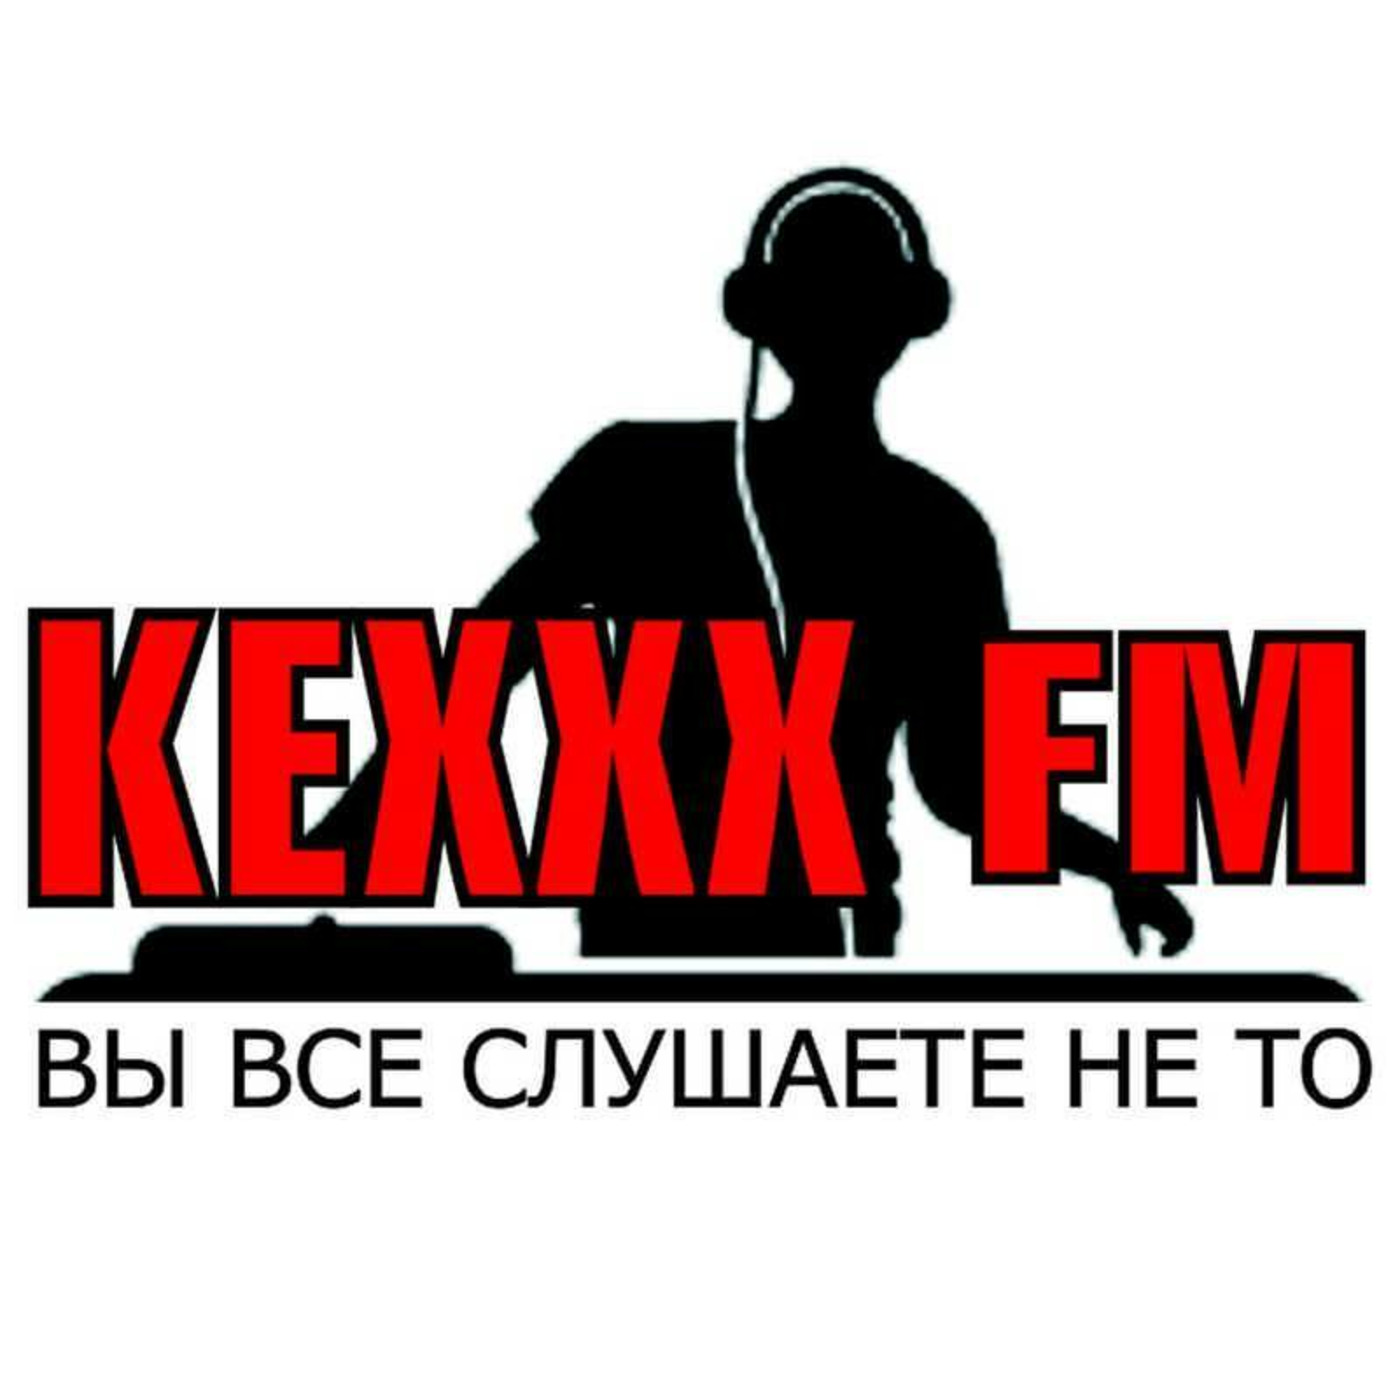 Live from SHERWOOD on KEXXX FM - dj Van der Jacques